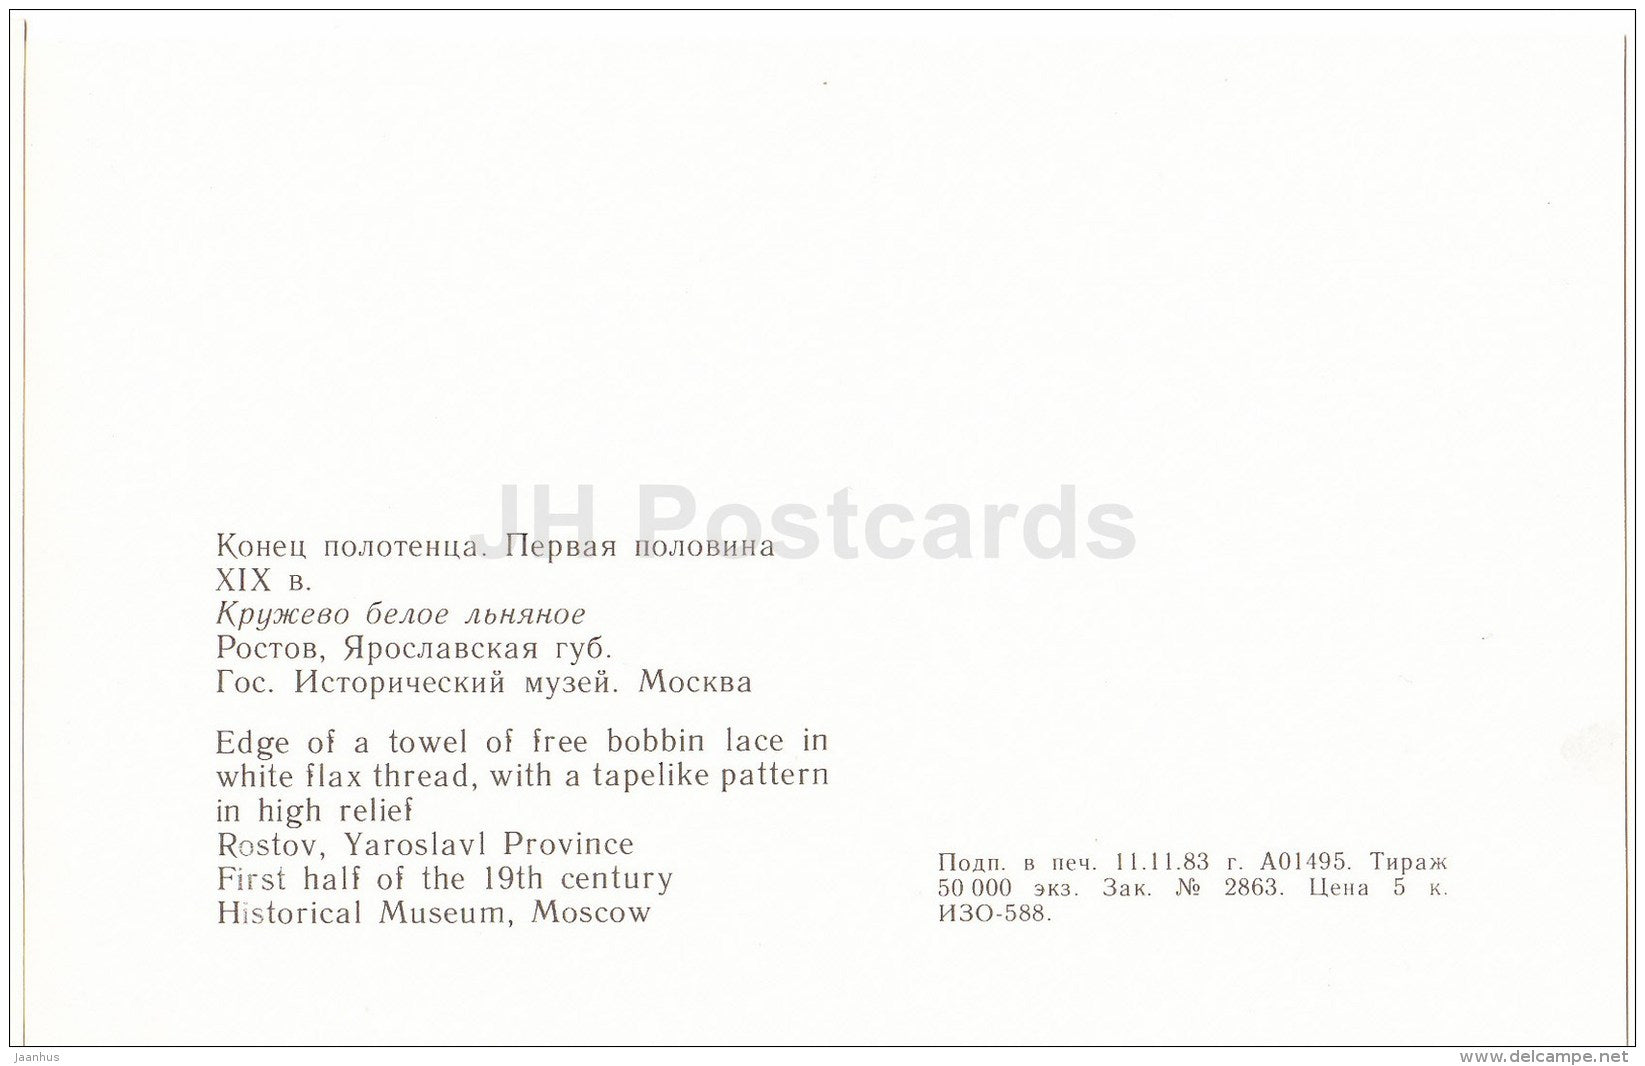 edge of a towel - Rostov , Yaroslavl province - Russian Lace - handicraft - 1983 - Russia USSR - unused - JH Postcards